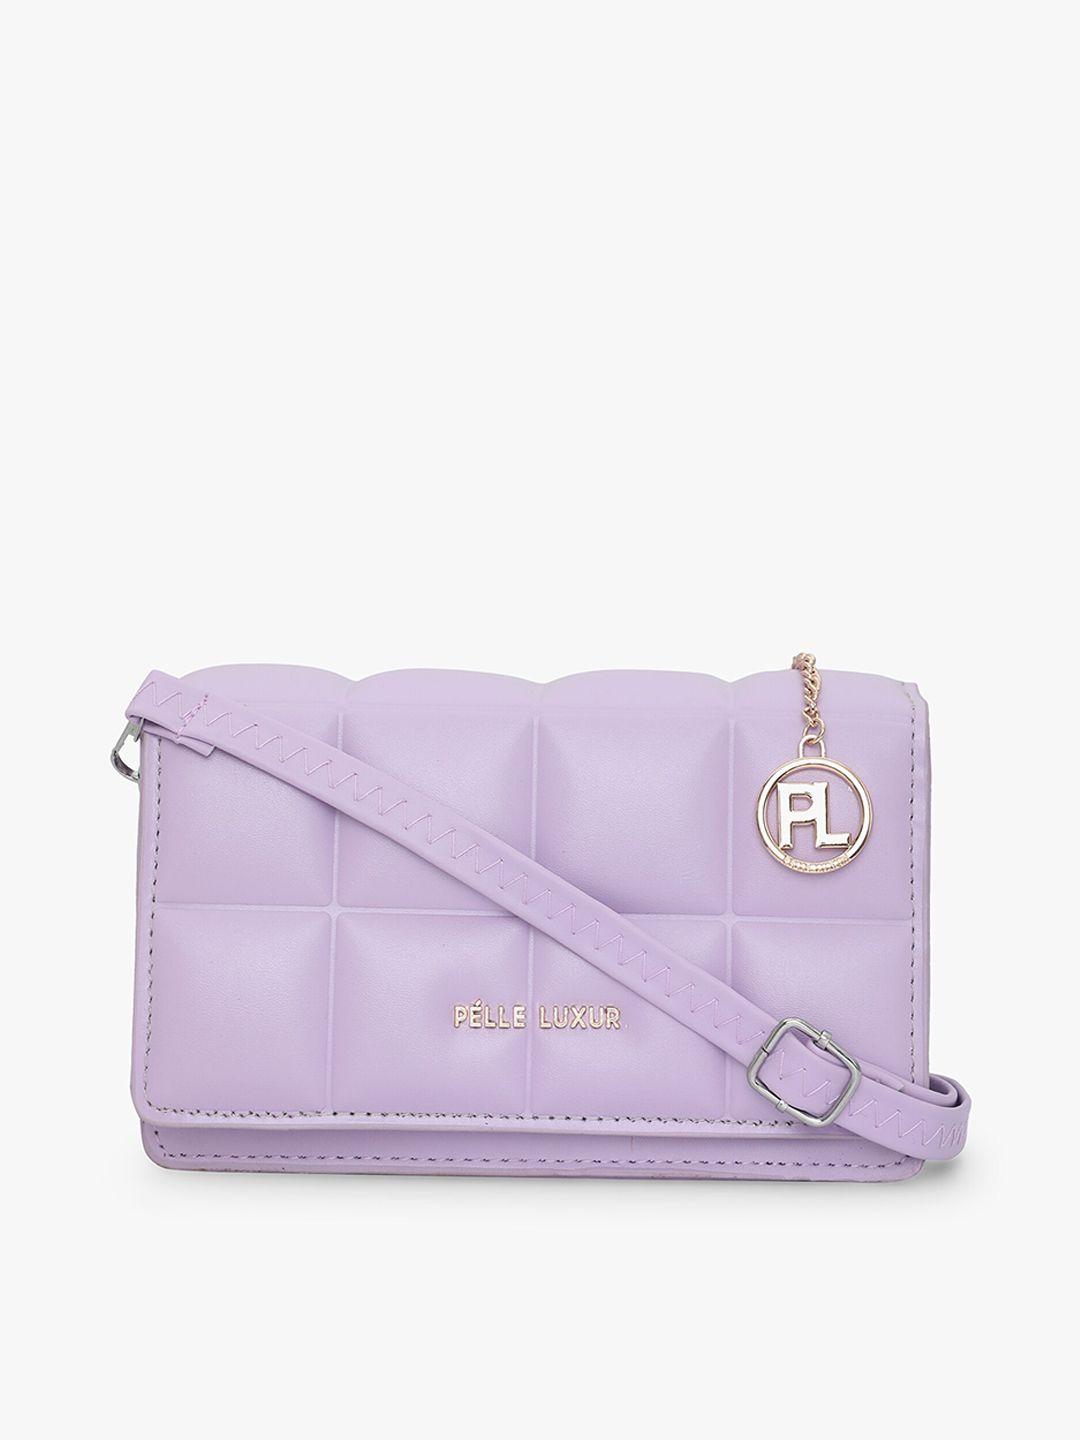 pelle luxur purple pu structured sling bag